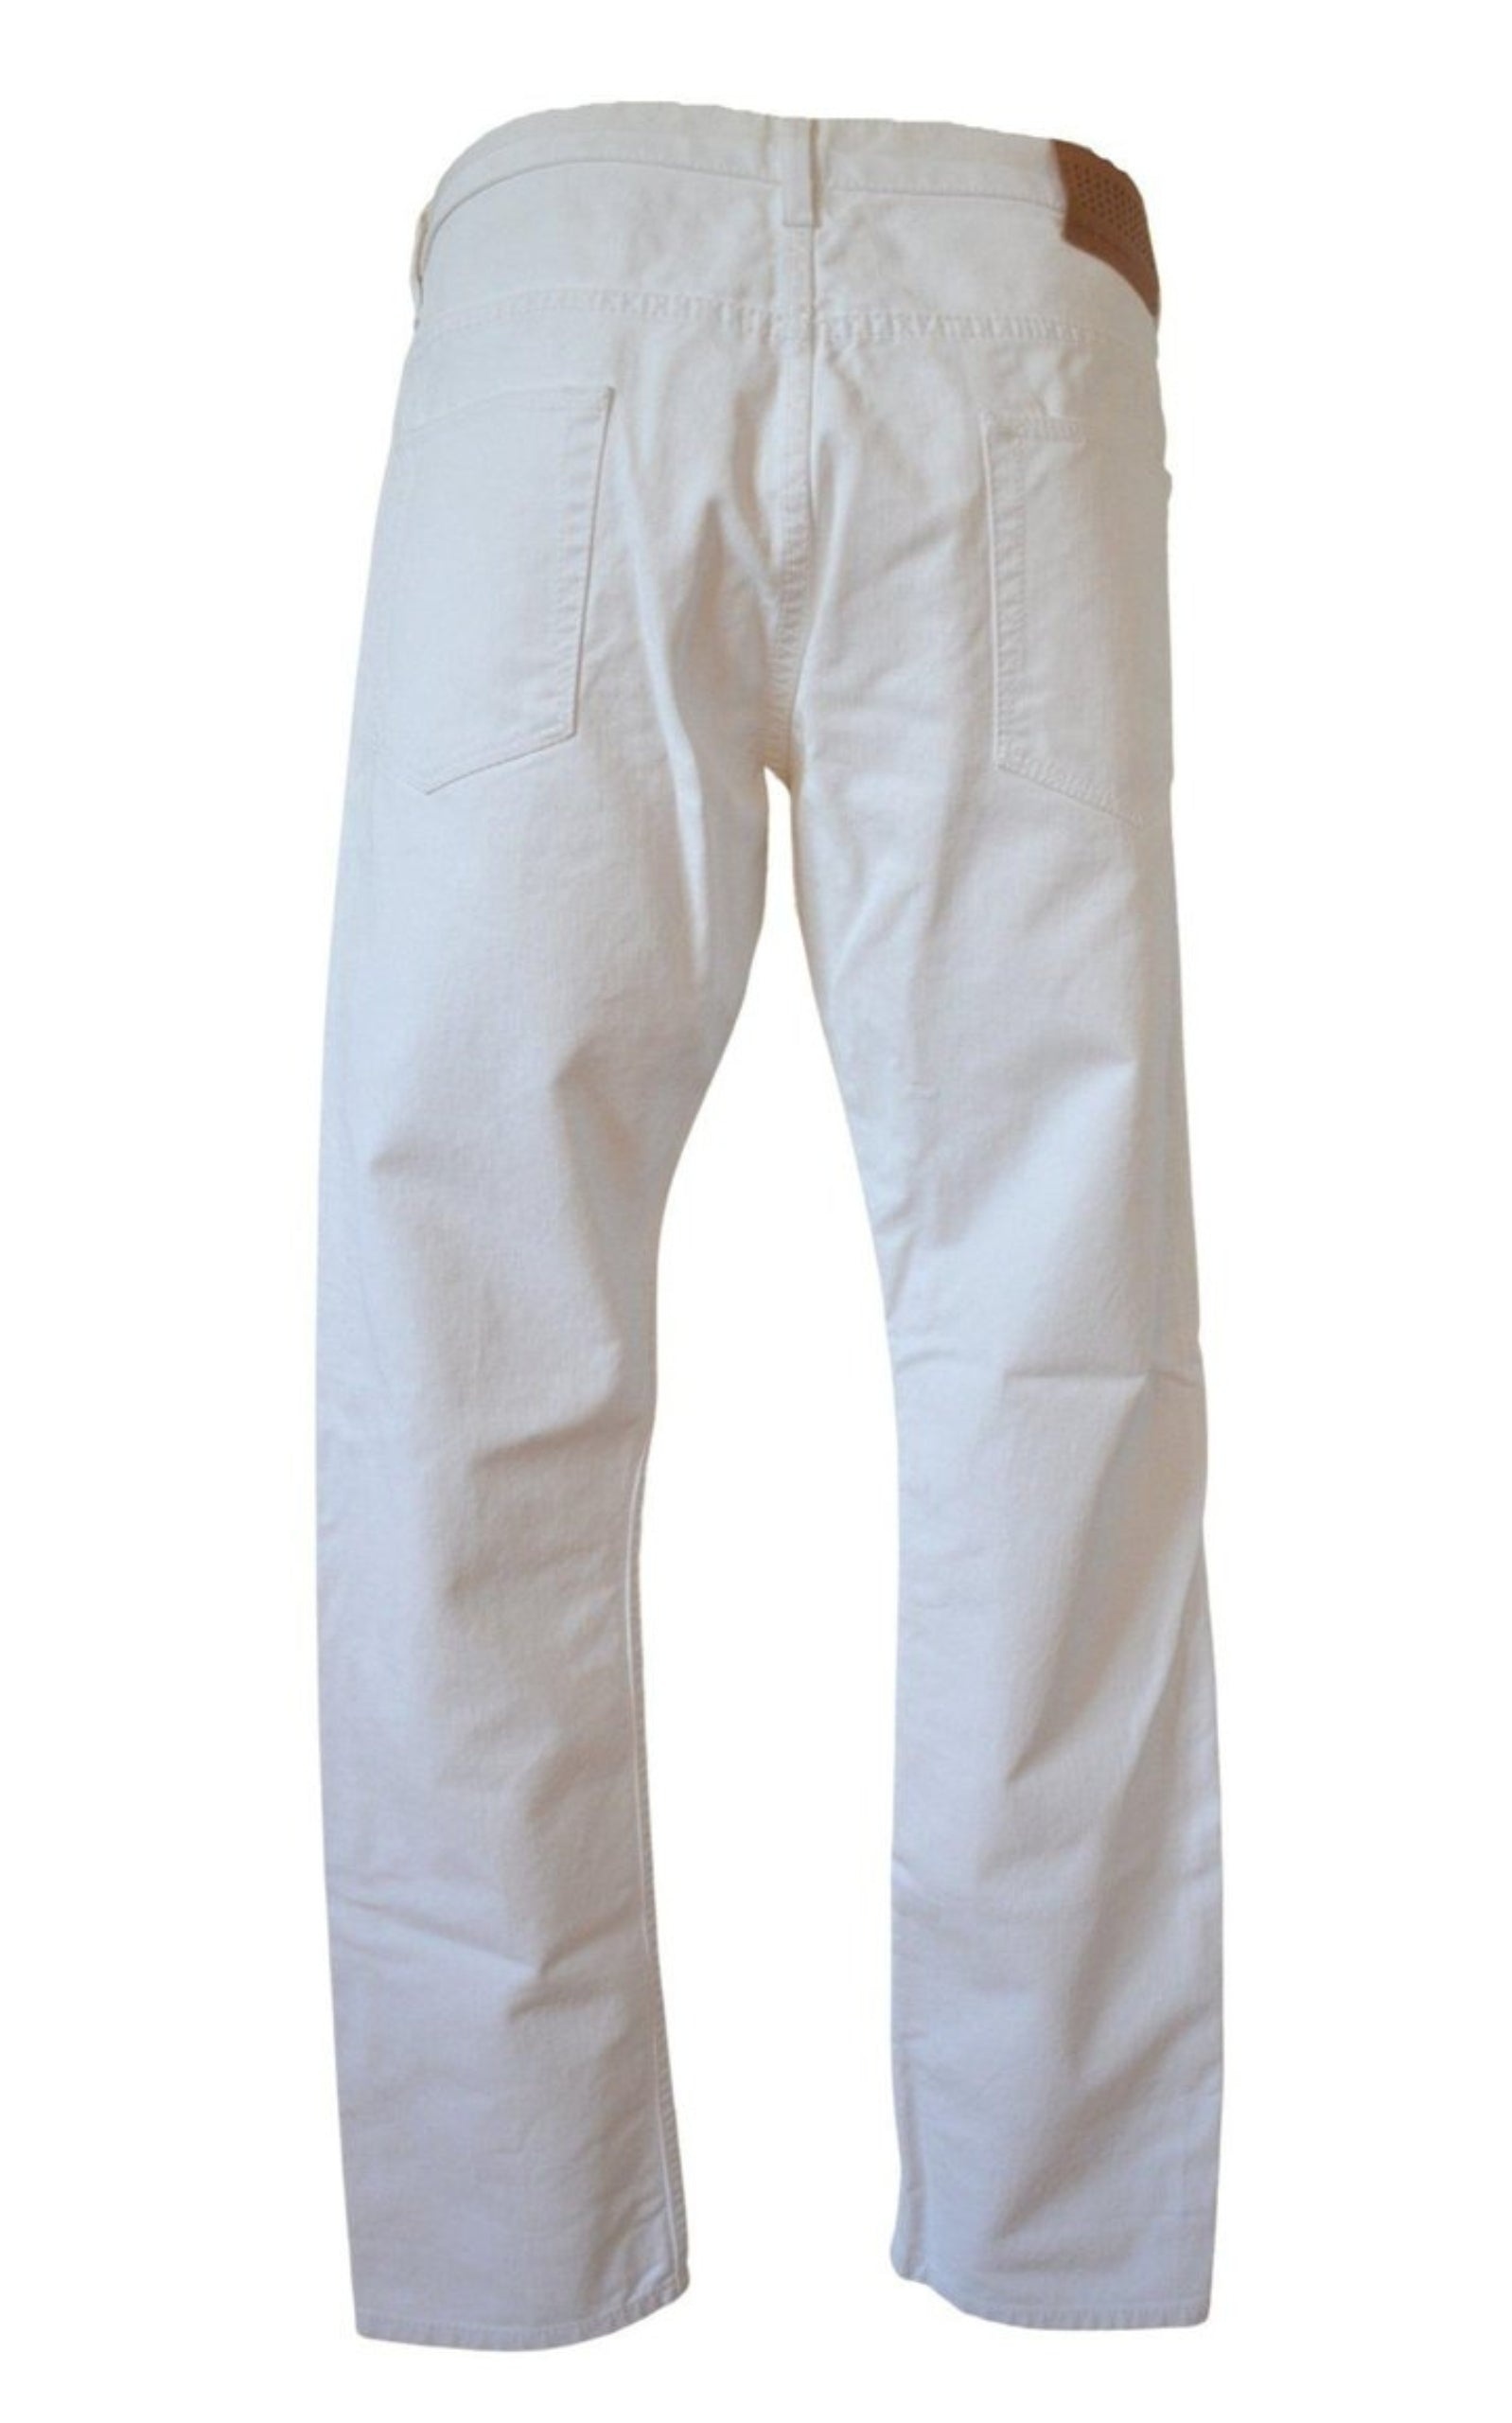 White Denim Jeans - 3